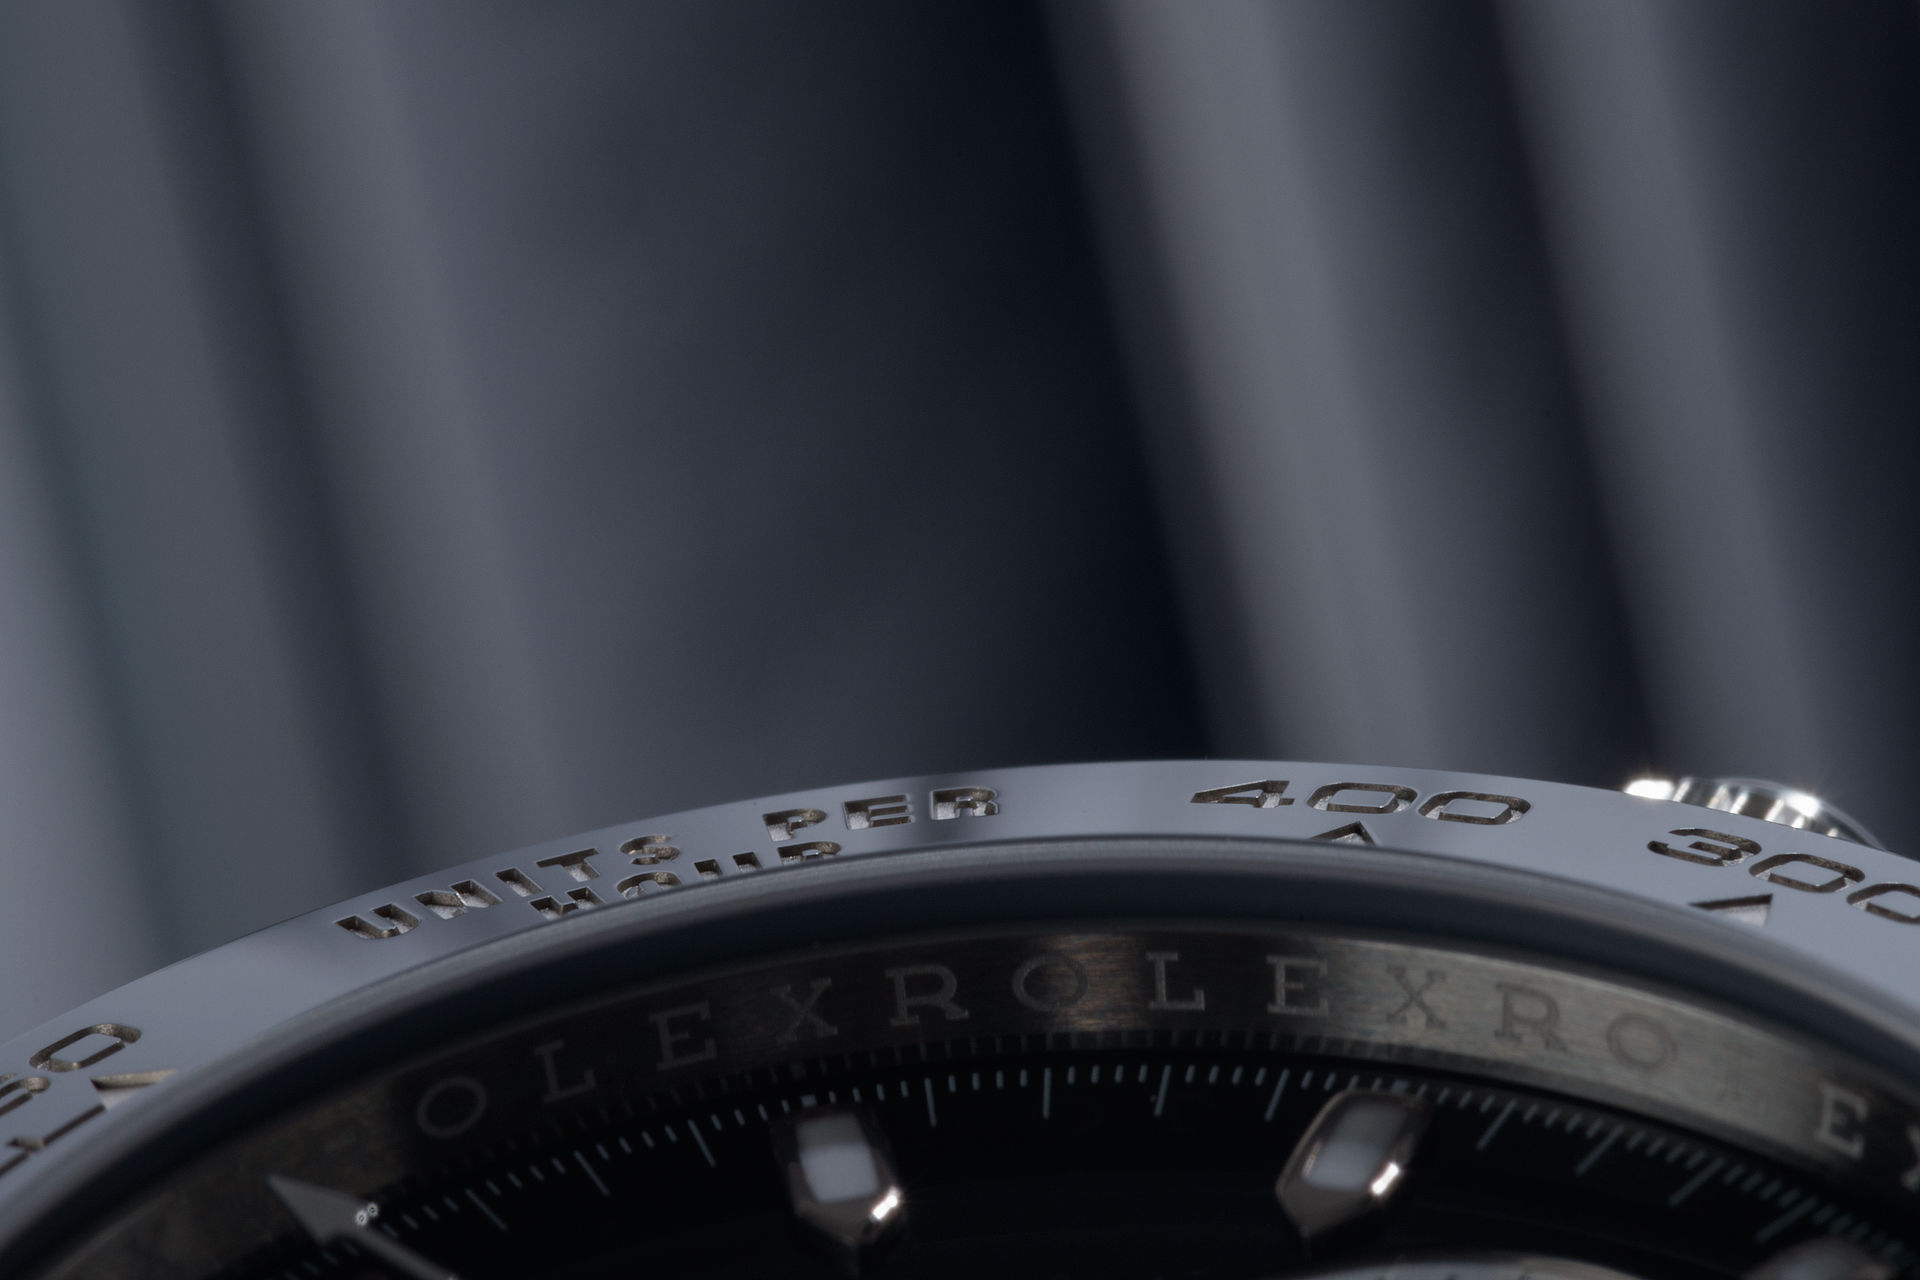 ref 116500LN | Brand New Stickered '5 Year Warranty' | Rolex Cosmograph Daytona